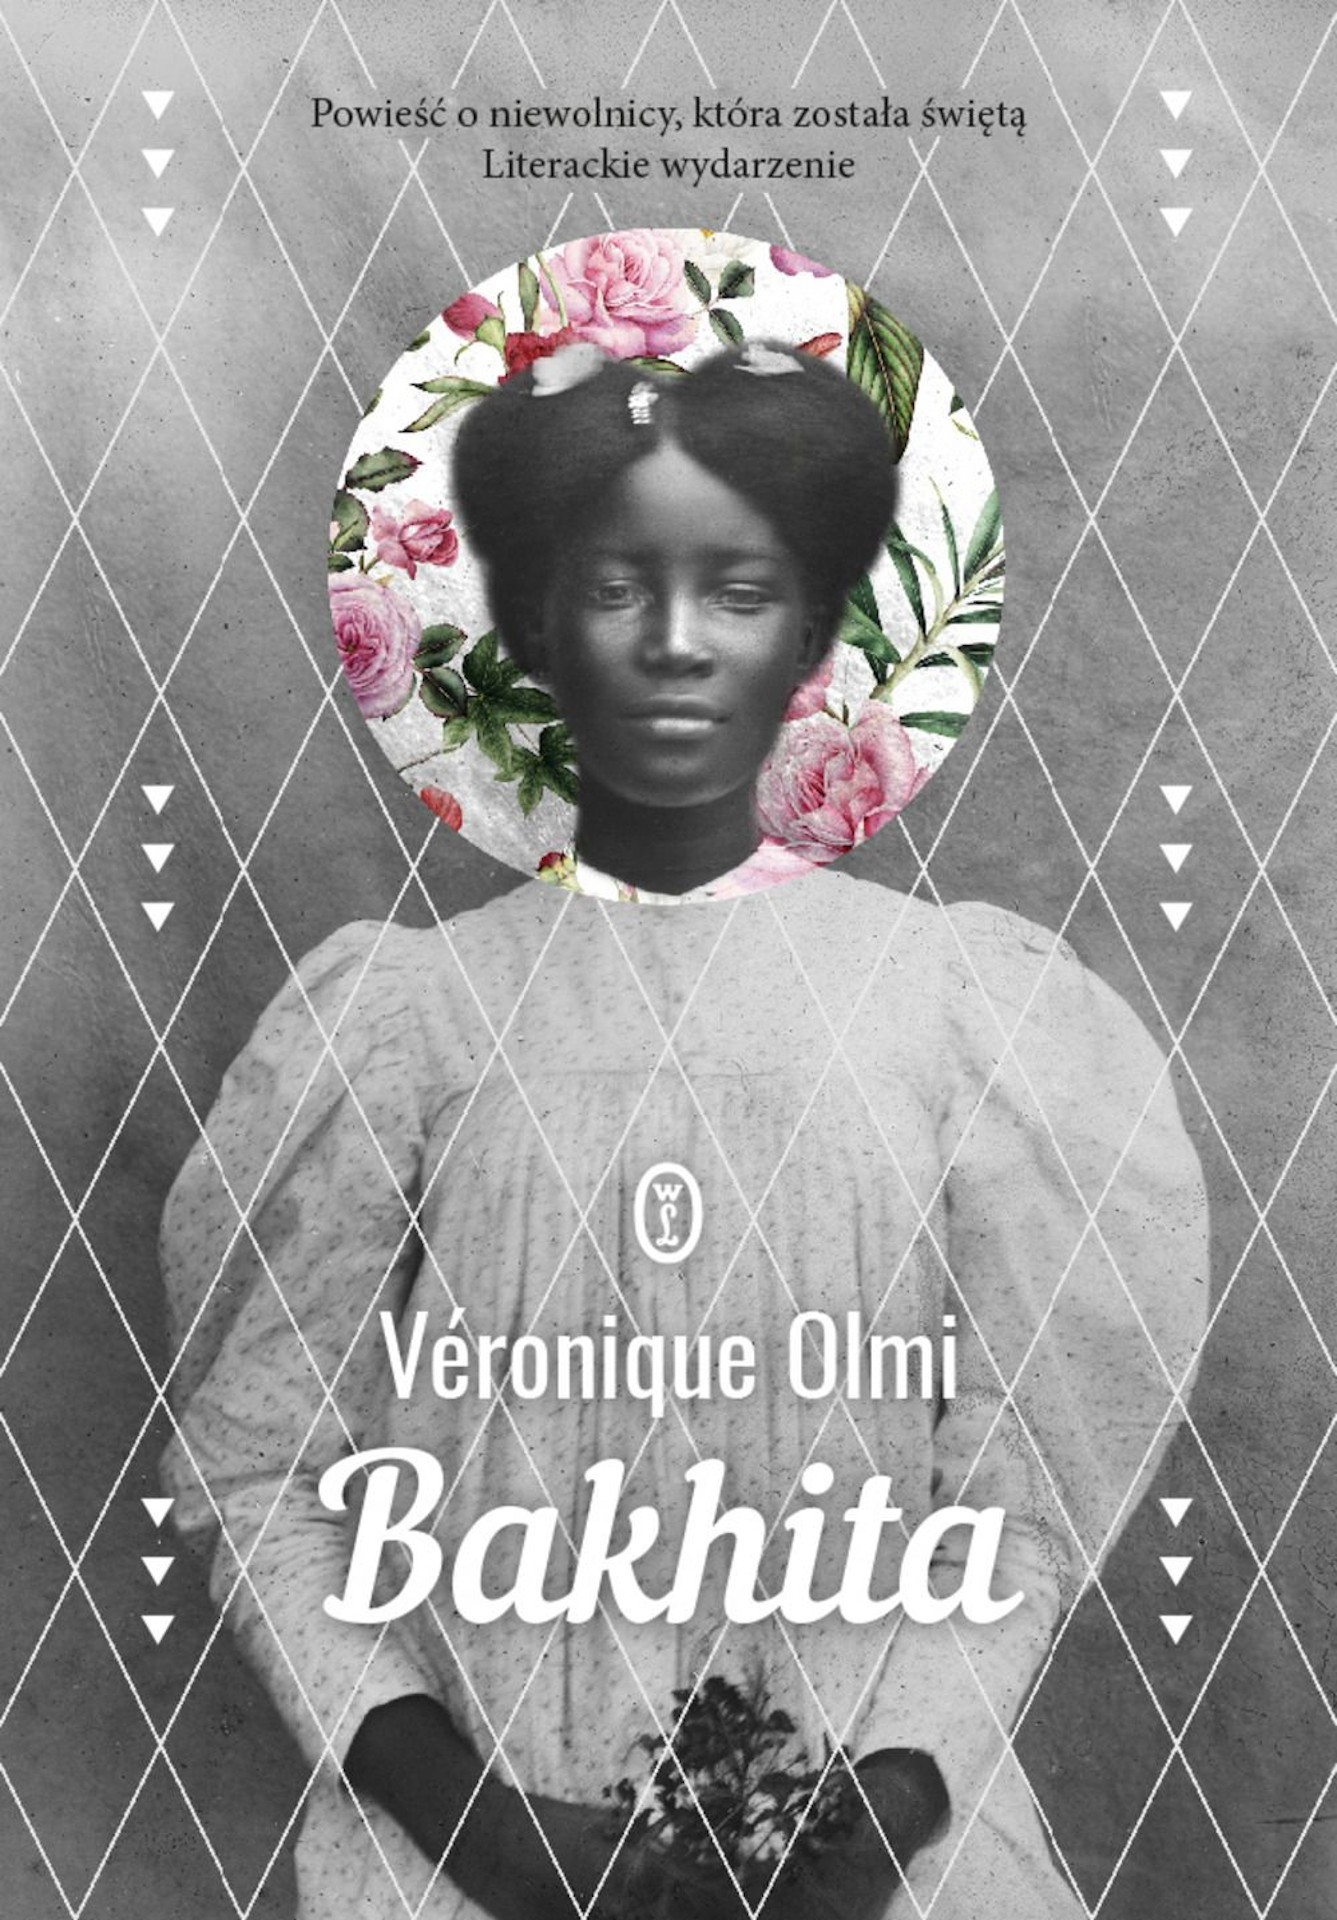 Veronique Olmi, Bakhita